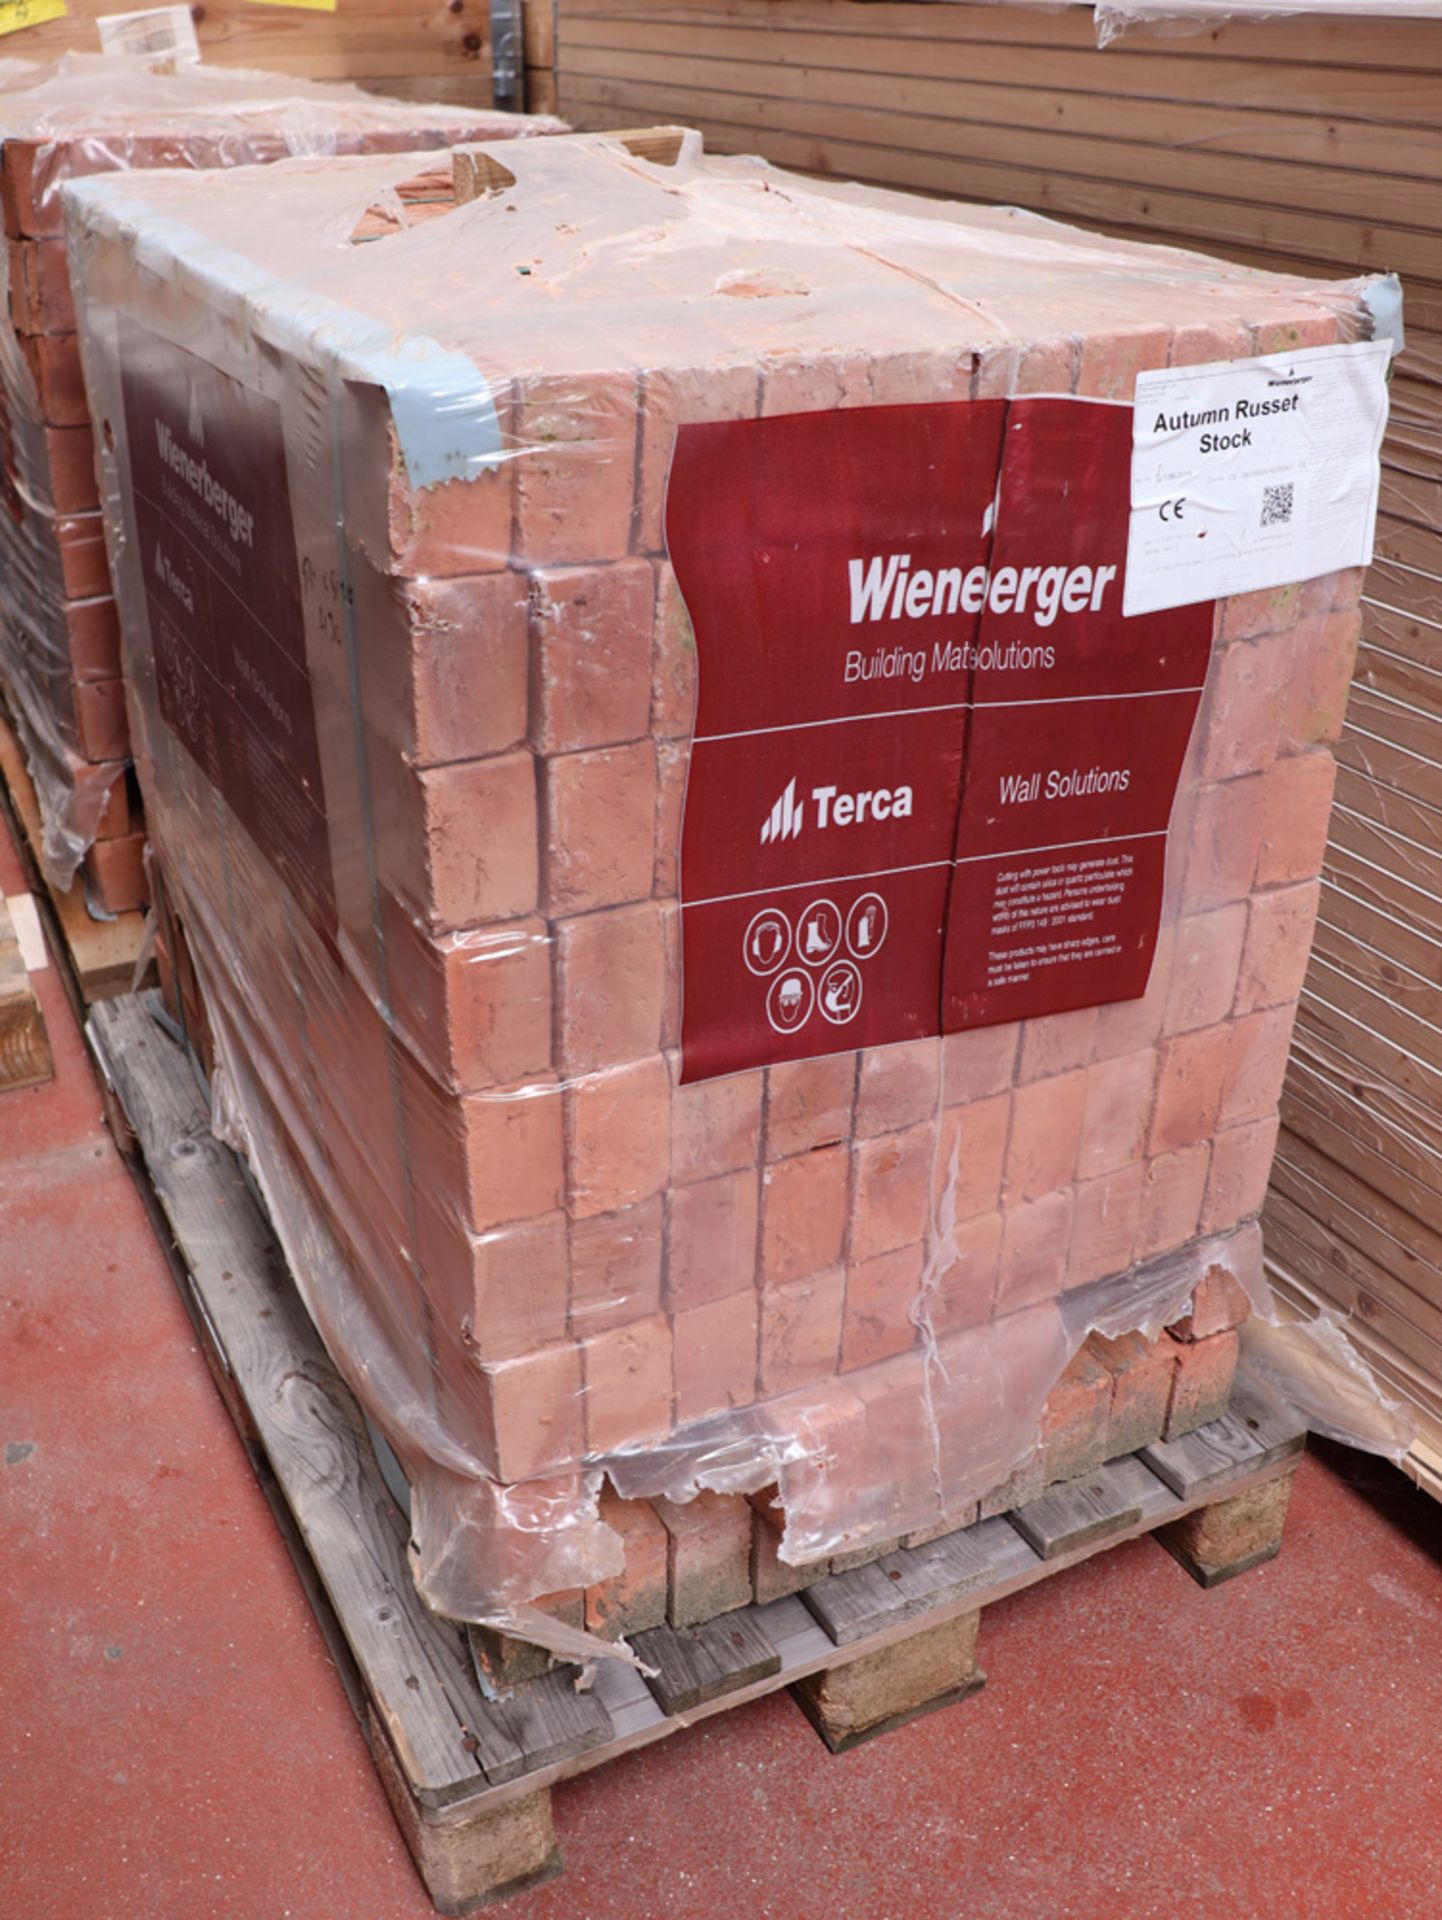 Pallet of 430 Wienerberger Autumn Russet stock bricks